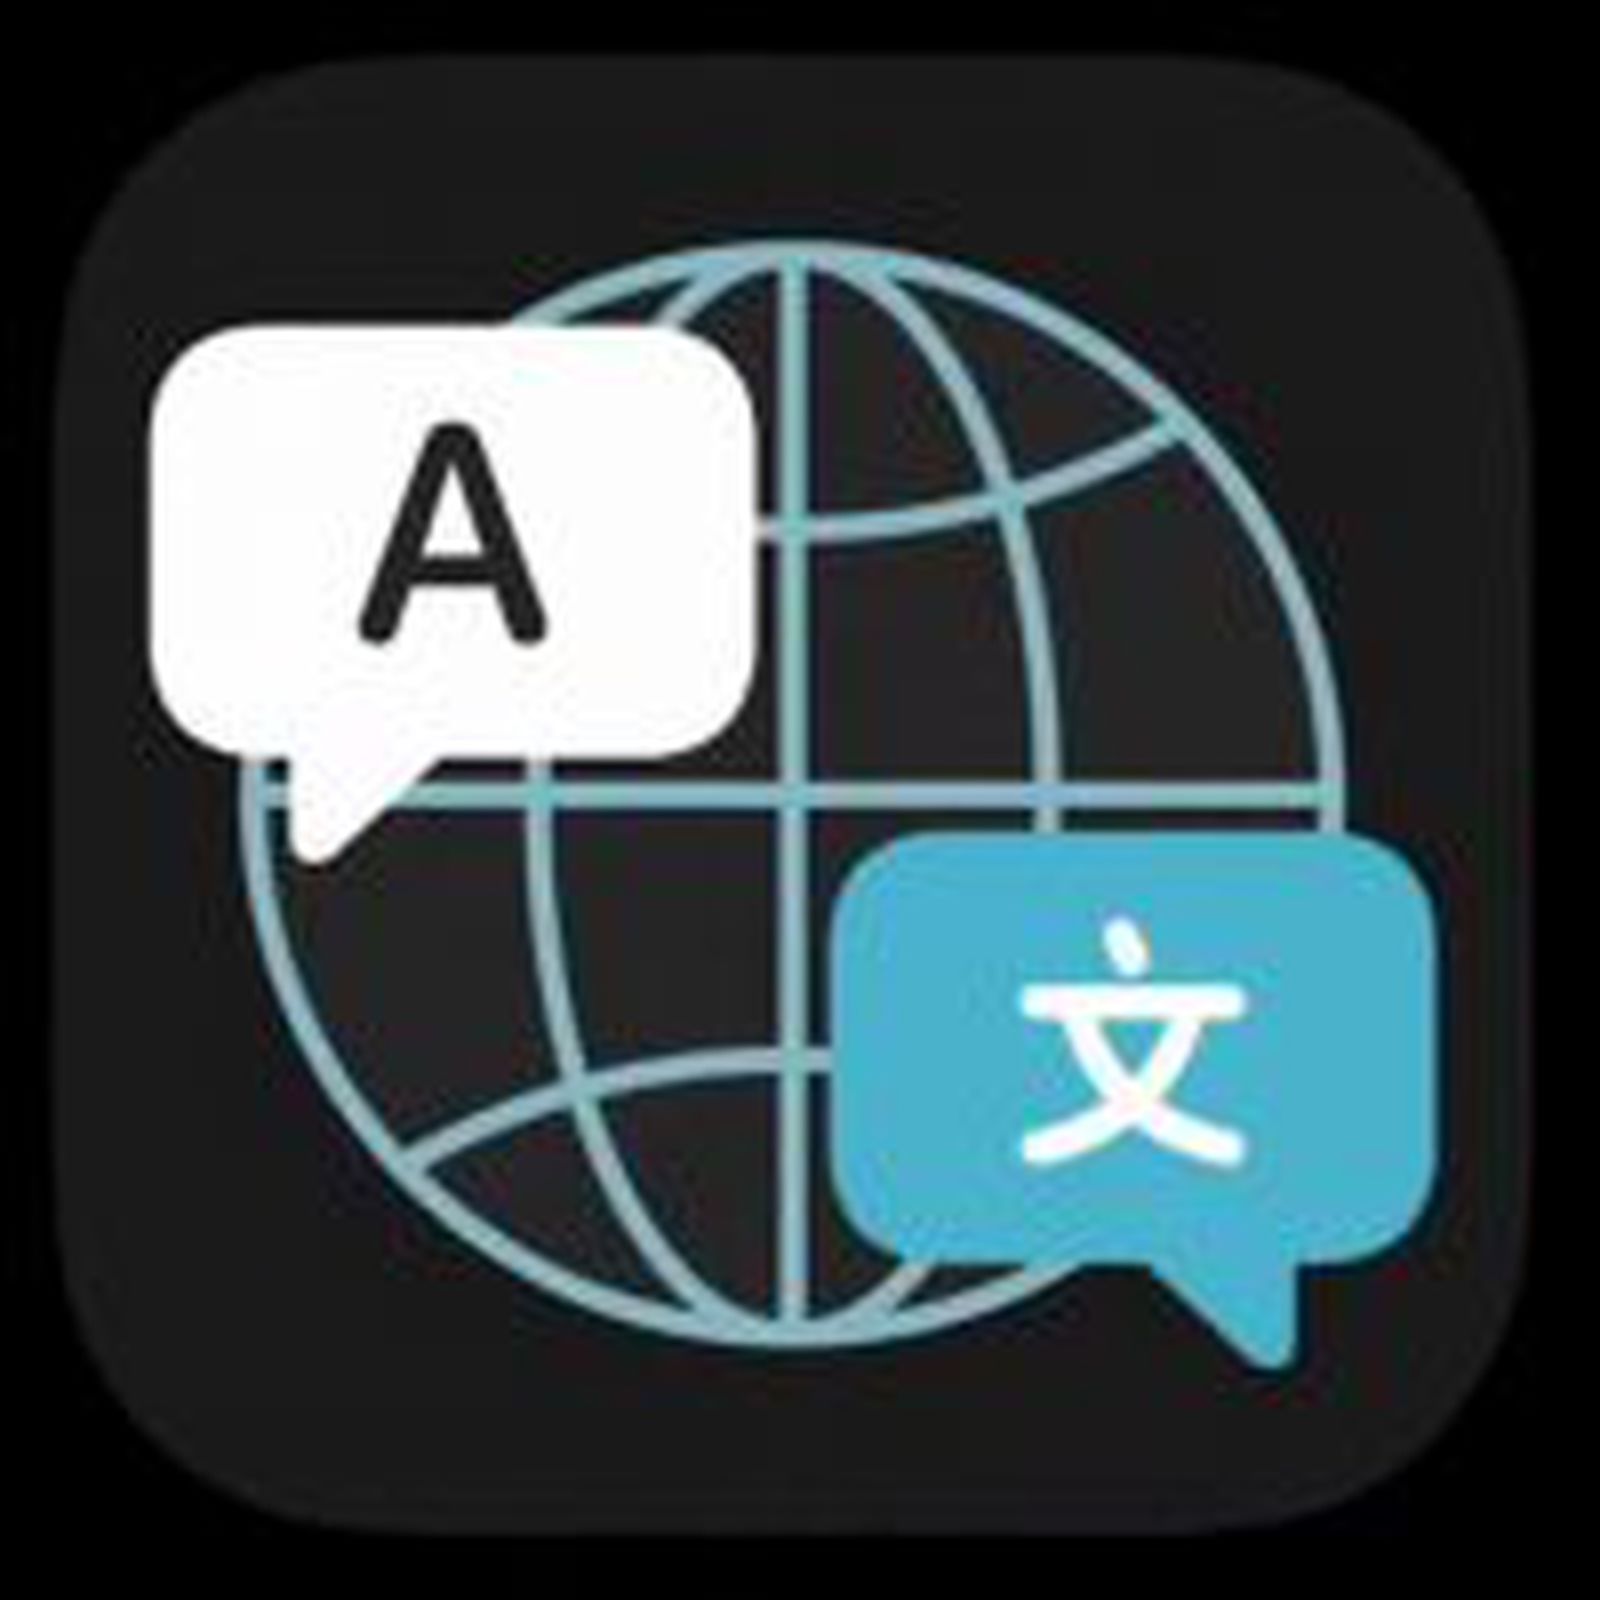 icons google translate app on iphone